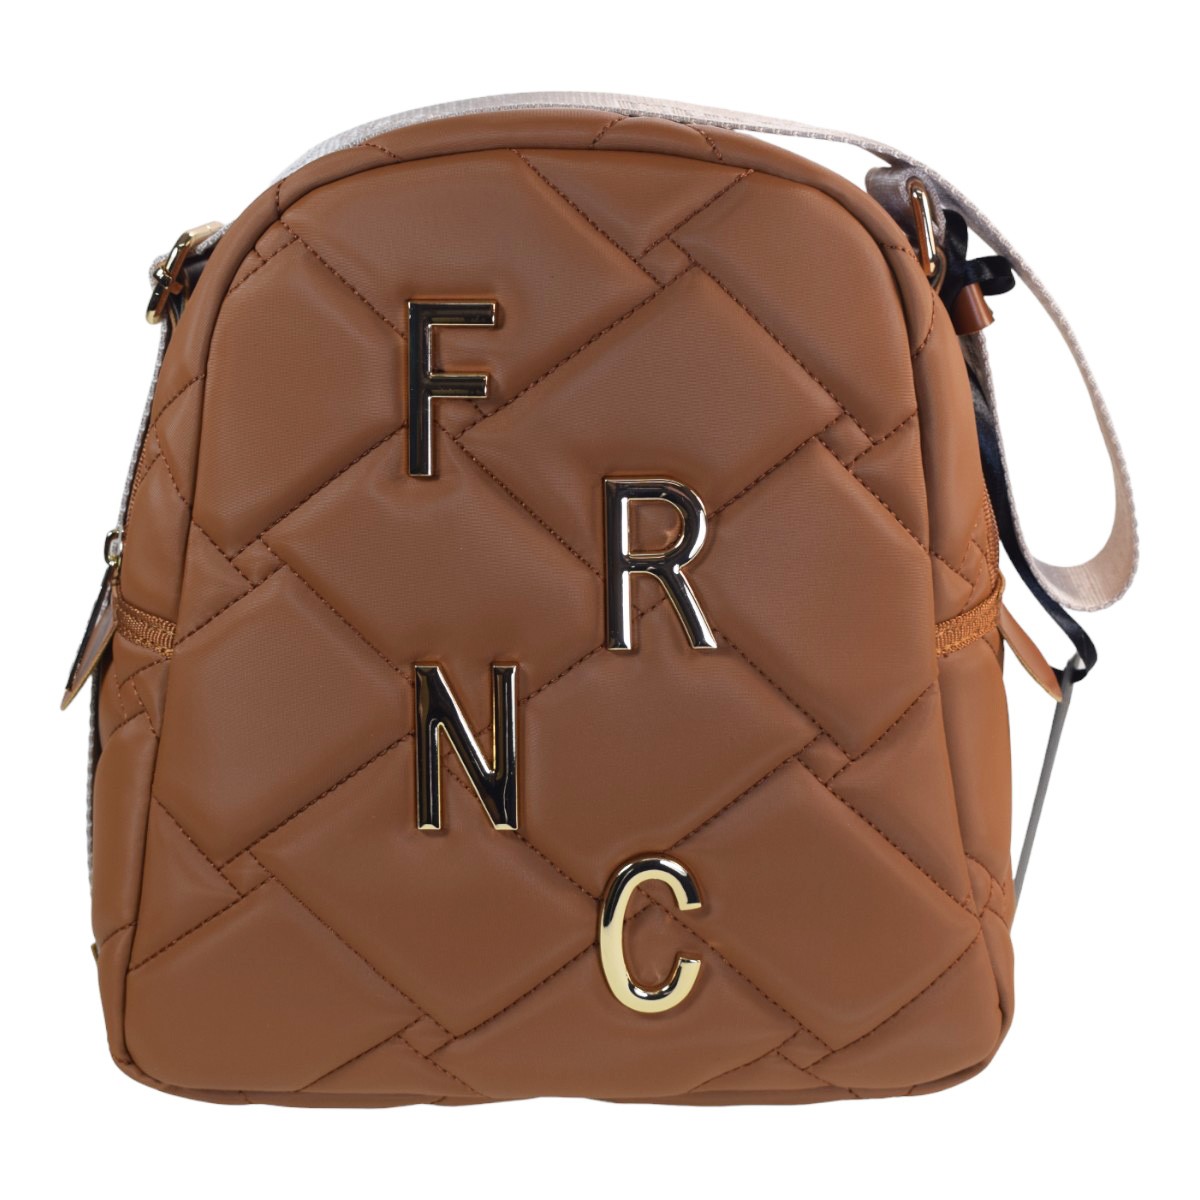 FRNC FRANCESCO Τσάντα Γυναικεία Πλάτης-Backpack Ώμου 4823 TB Ταμπά 4823 tb